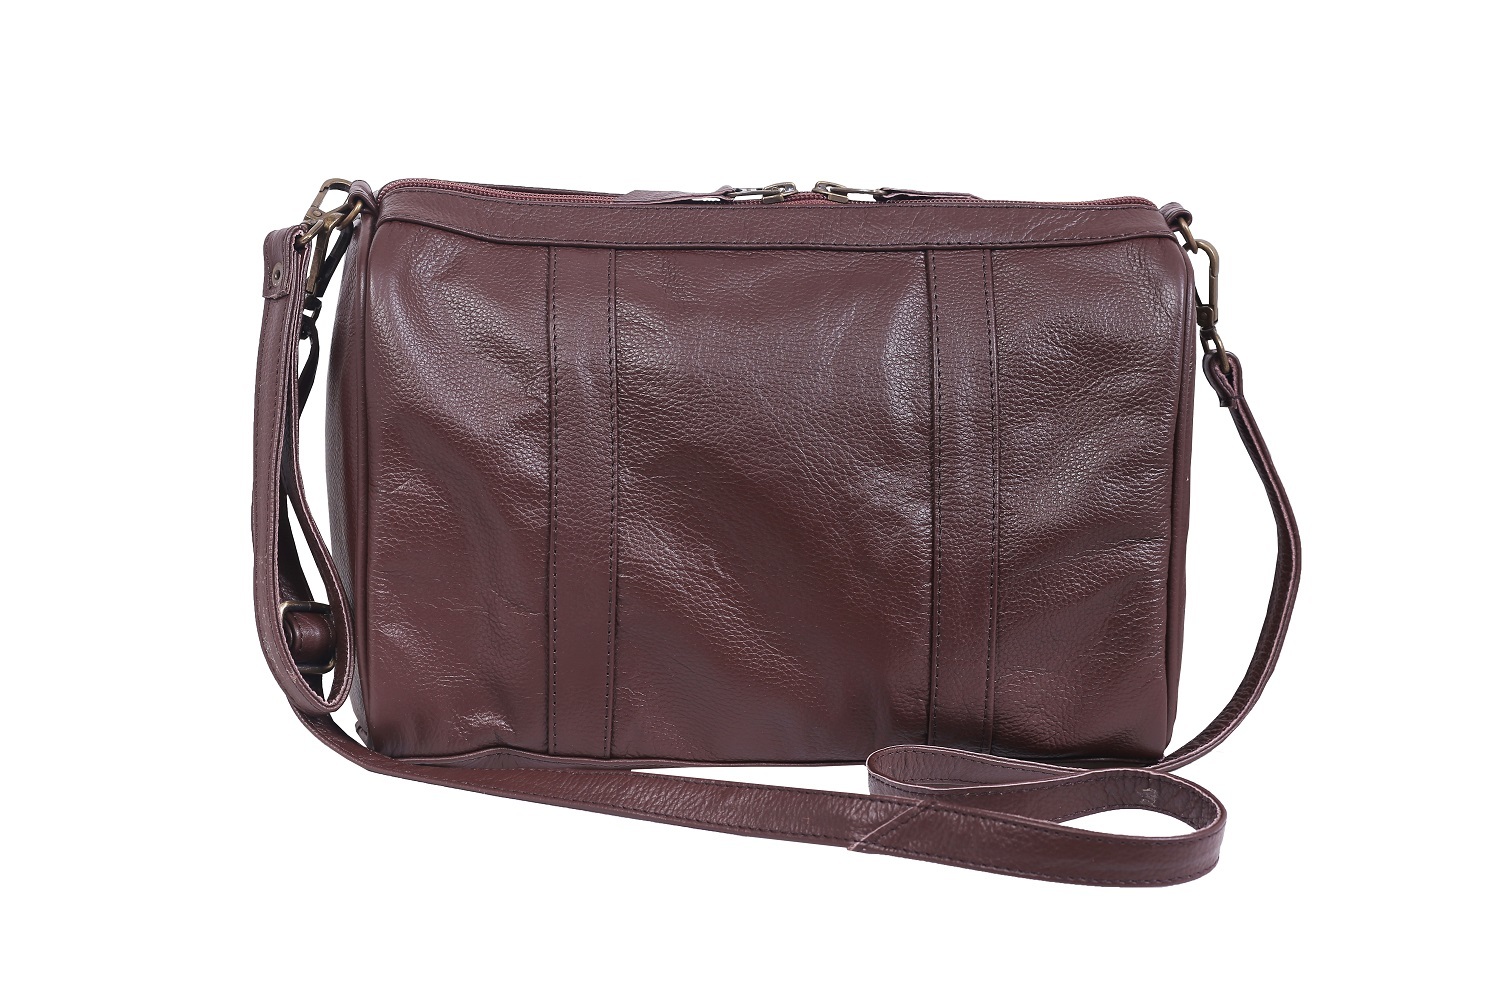 Personalized Groomsmen Gift, Leather Toiletry Bag, Make Up Kit Bag, Travel Bag,